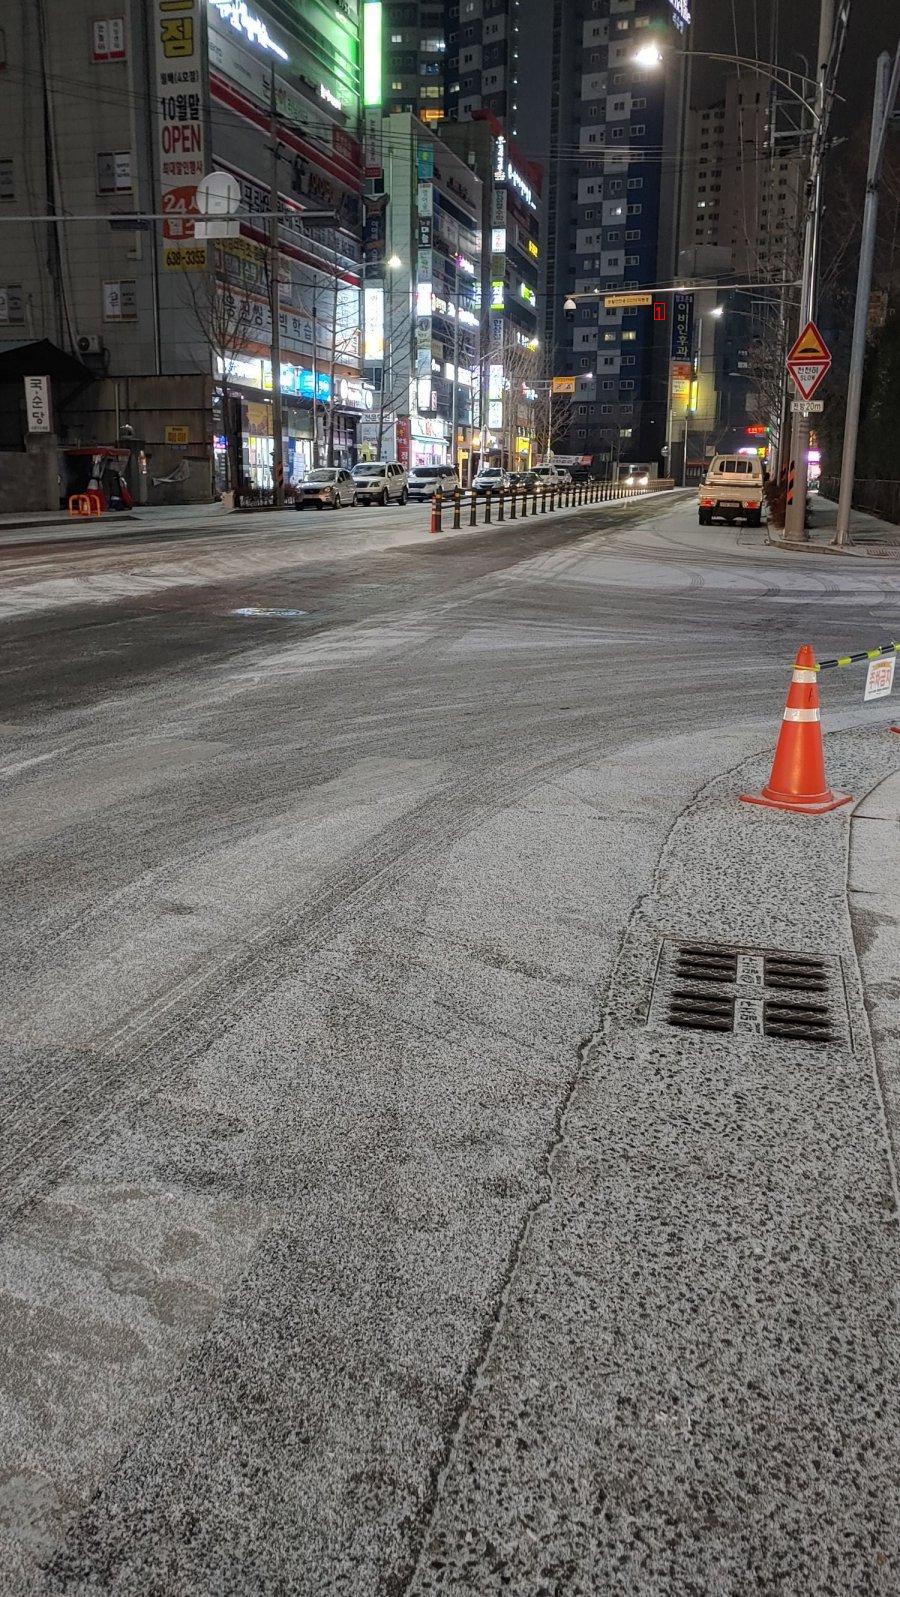 Tomorrow morning, it will be an icy road in Daegu.